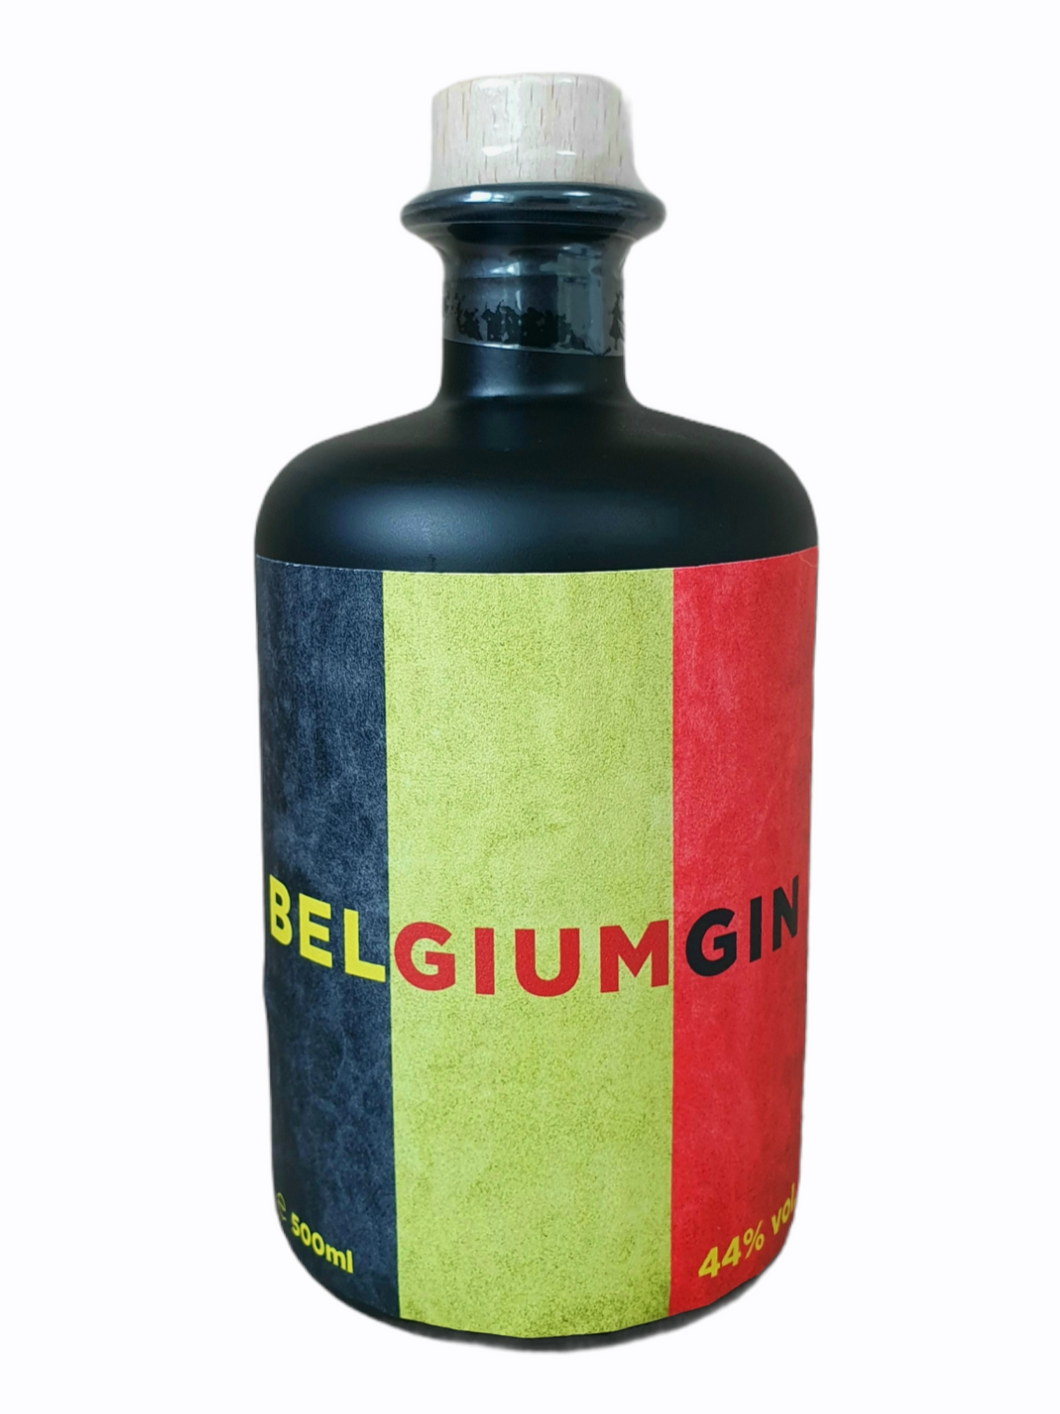 Belgium Gin